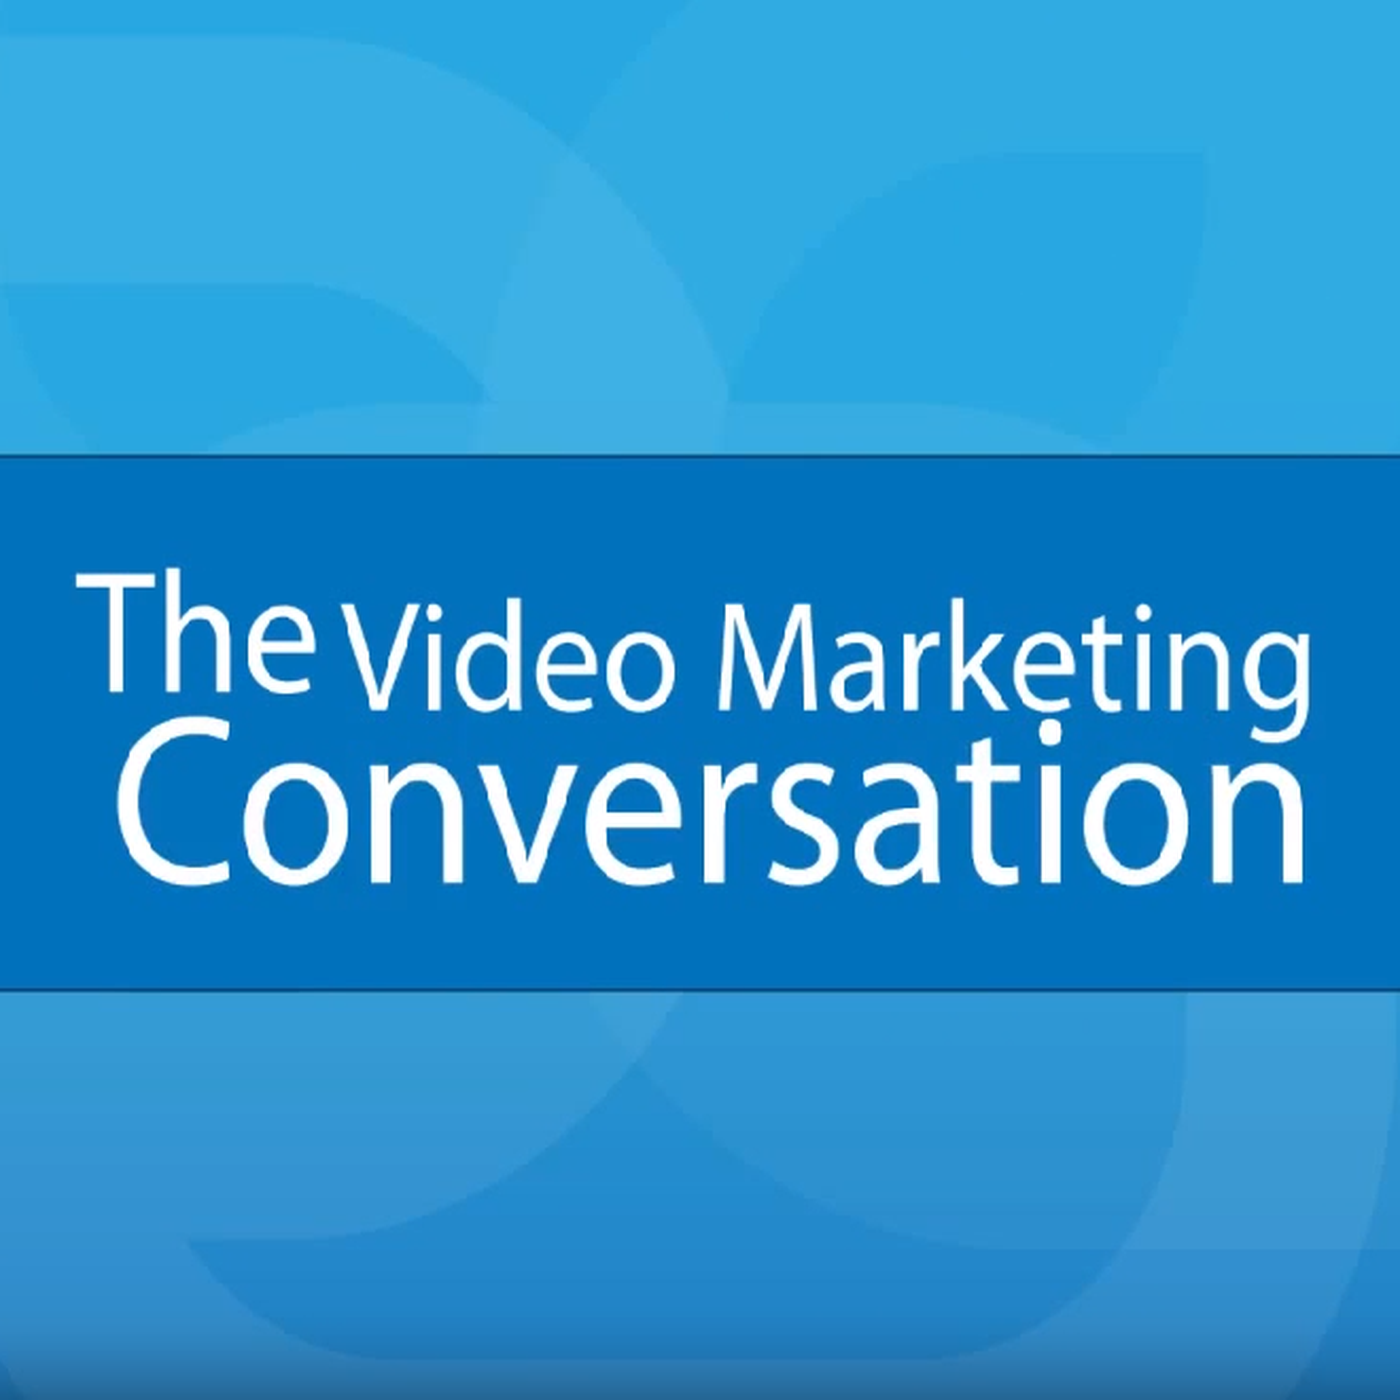 The Video Marketing Conversation